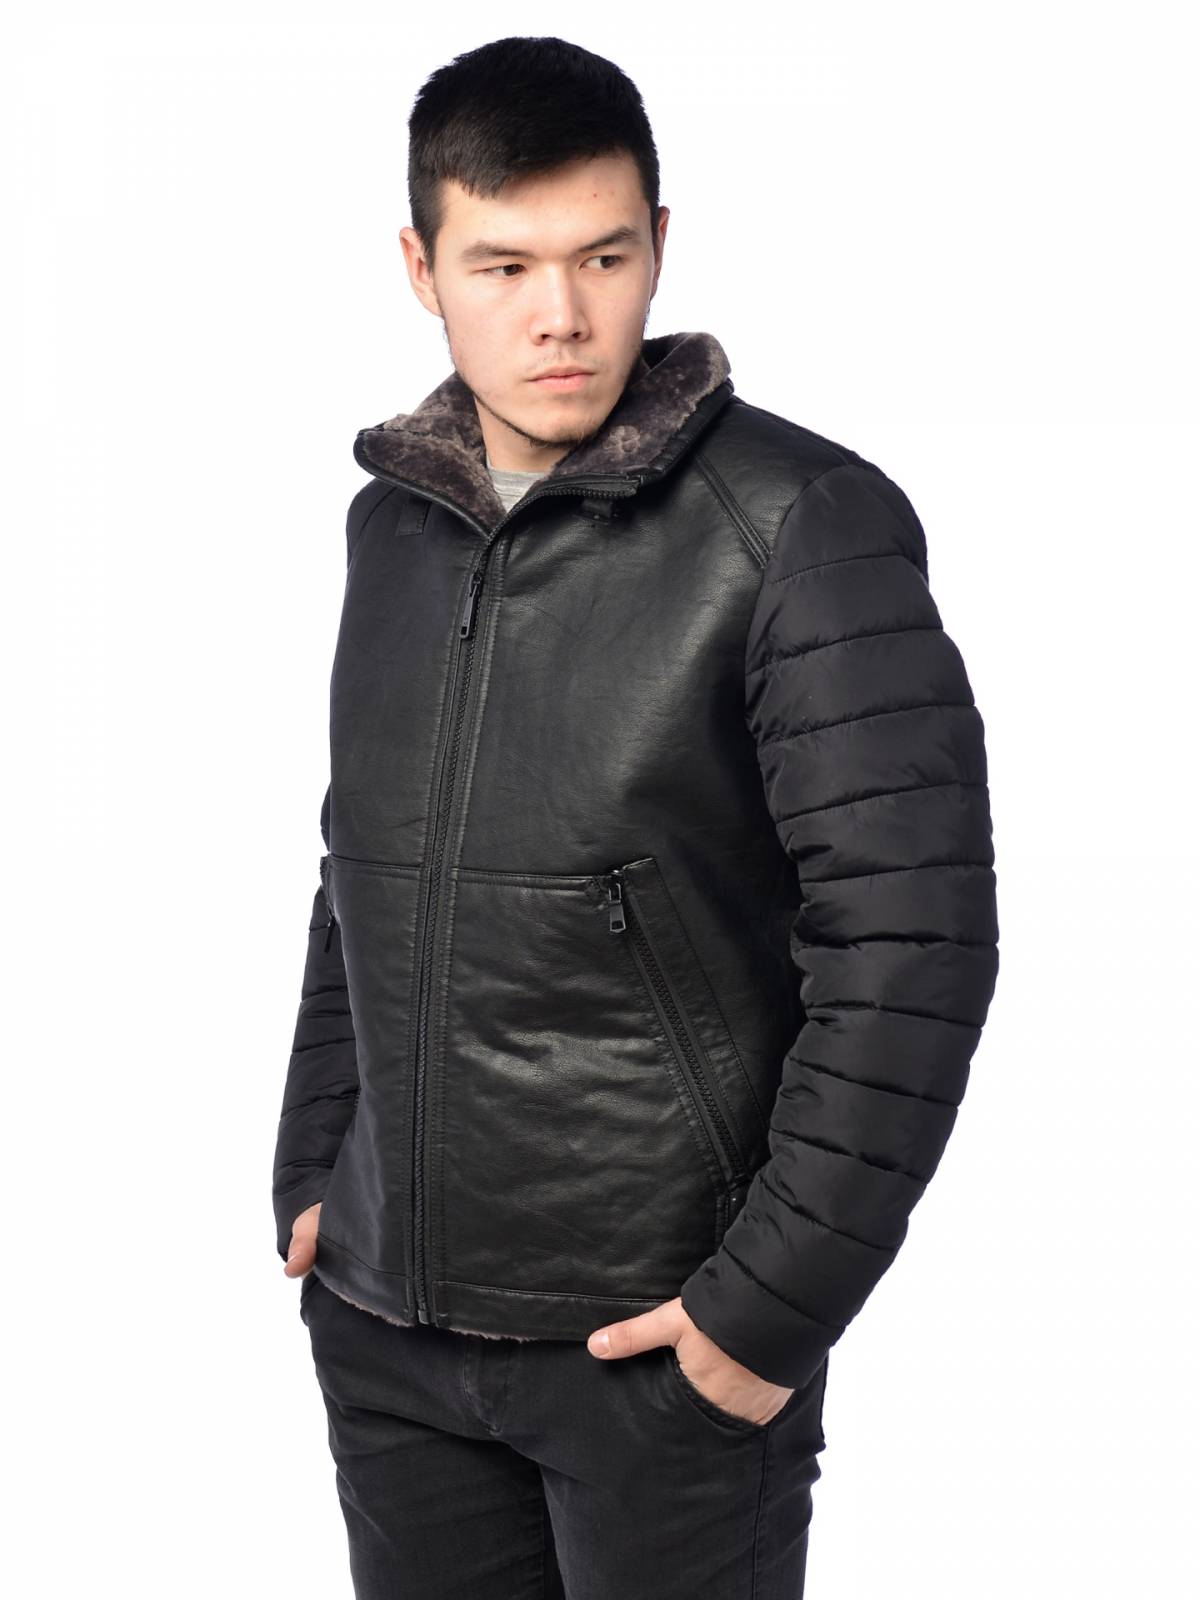 Зимняя куртка мужская Fanfaroni 3613 черная 48 RU